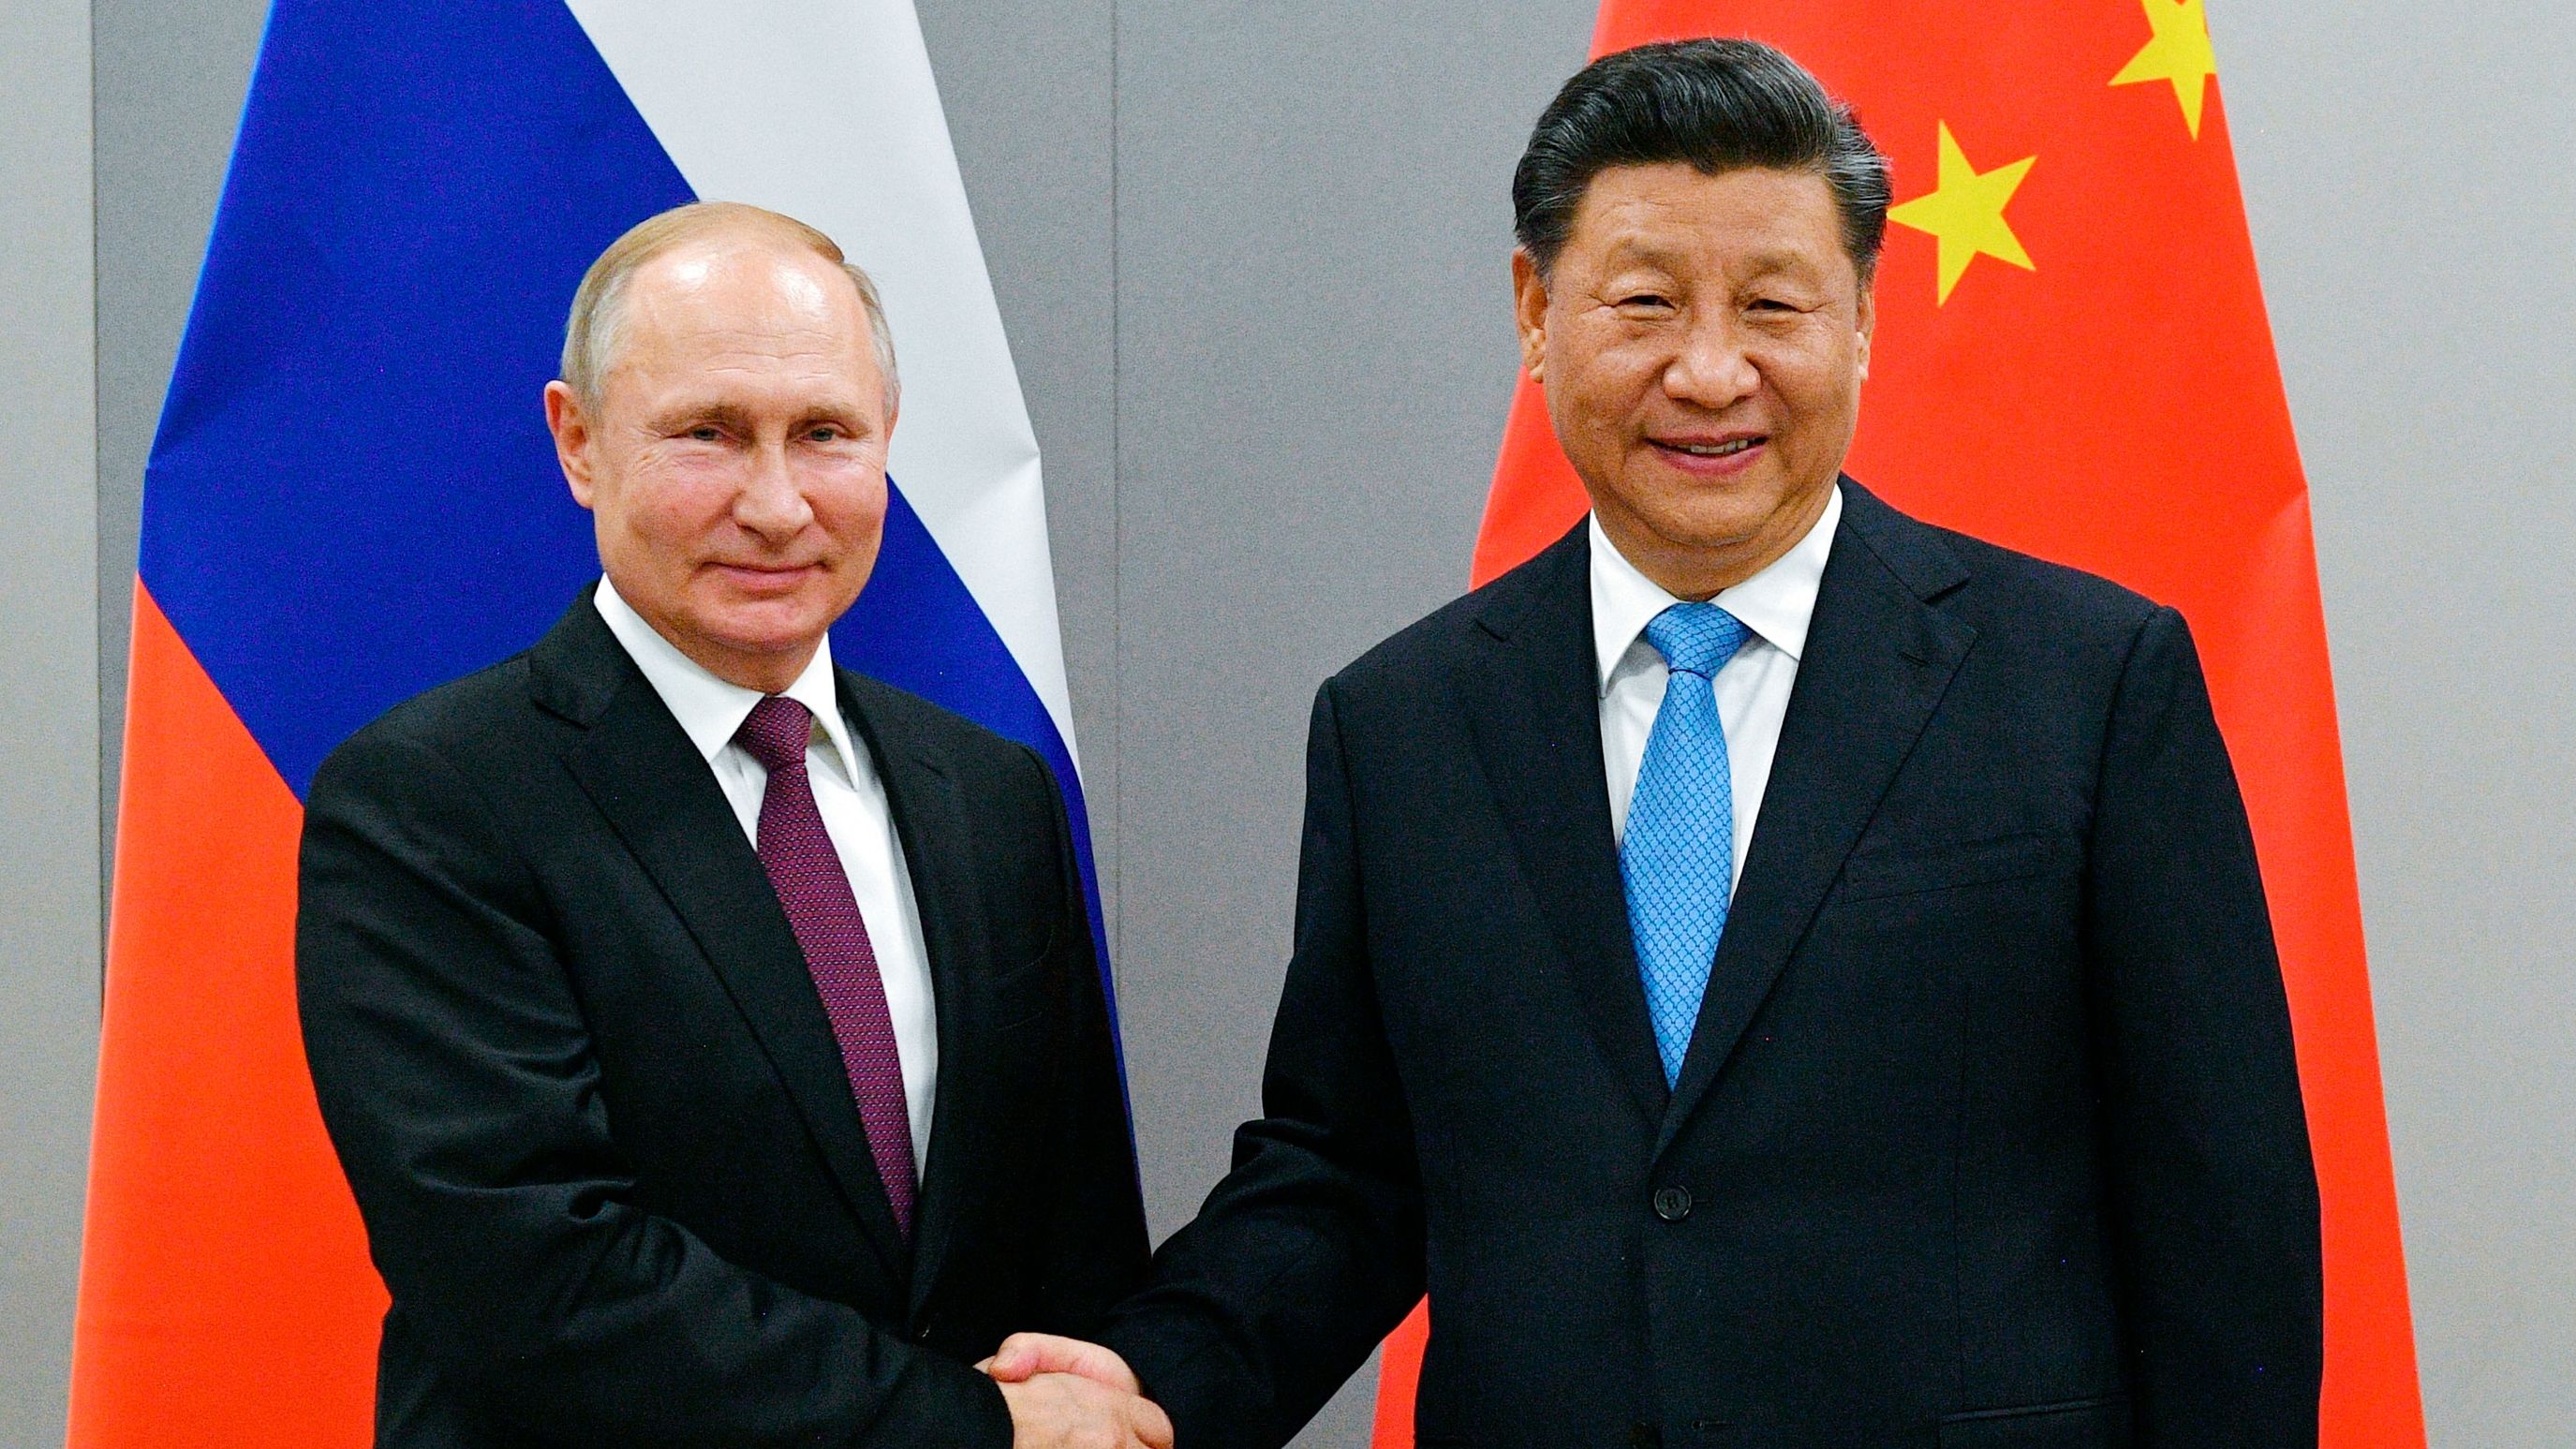 Russian President Vladimir Putin and China's President Xi Jinping shake hands at the BRICS Summit in Brazil in November, 2019. 